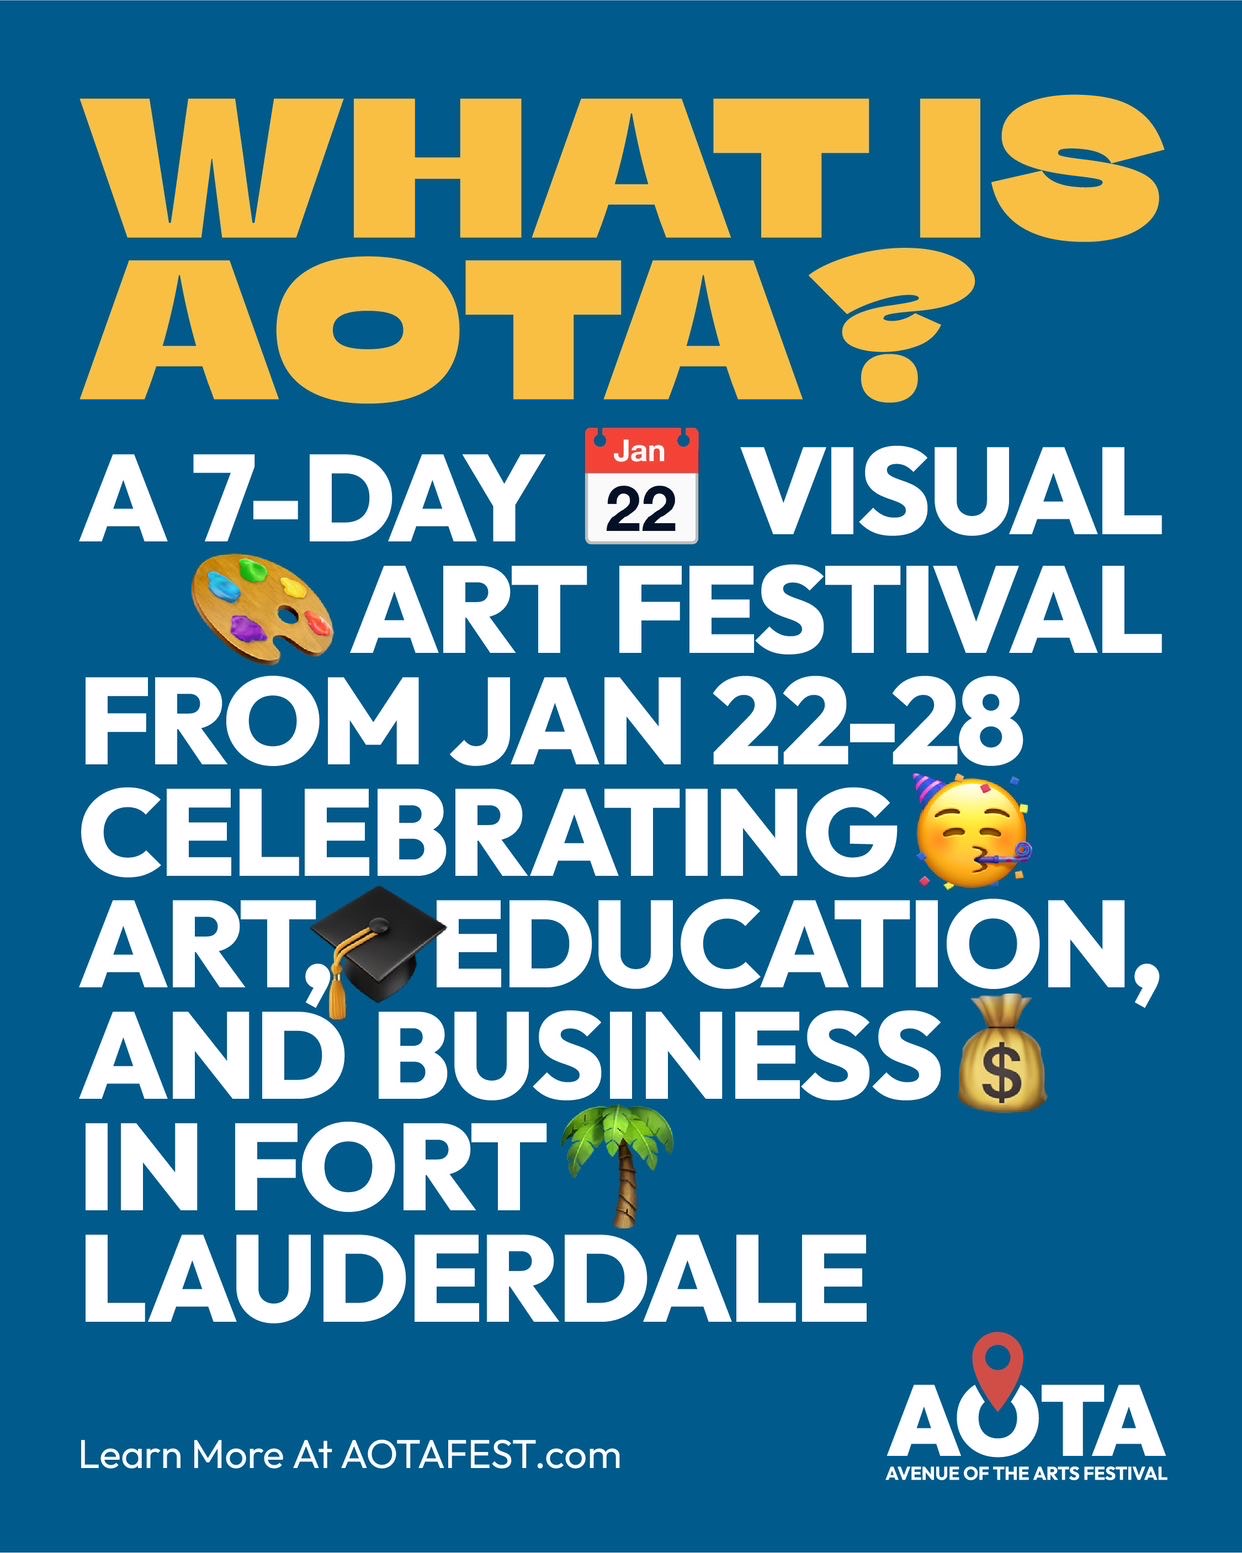 Second Annual Avenue of the Arts (AOTA) Visual Arts Festival